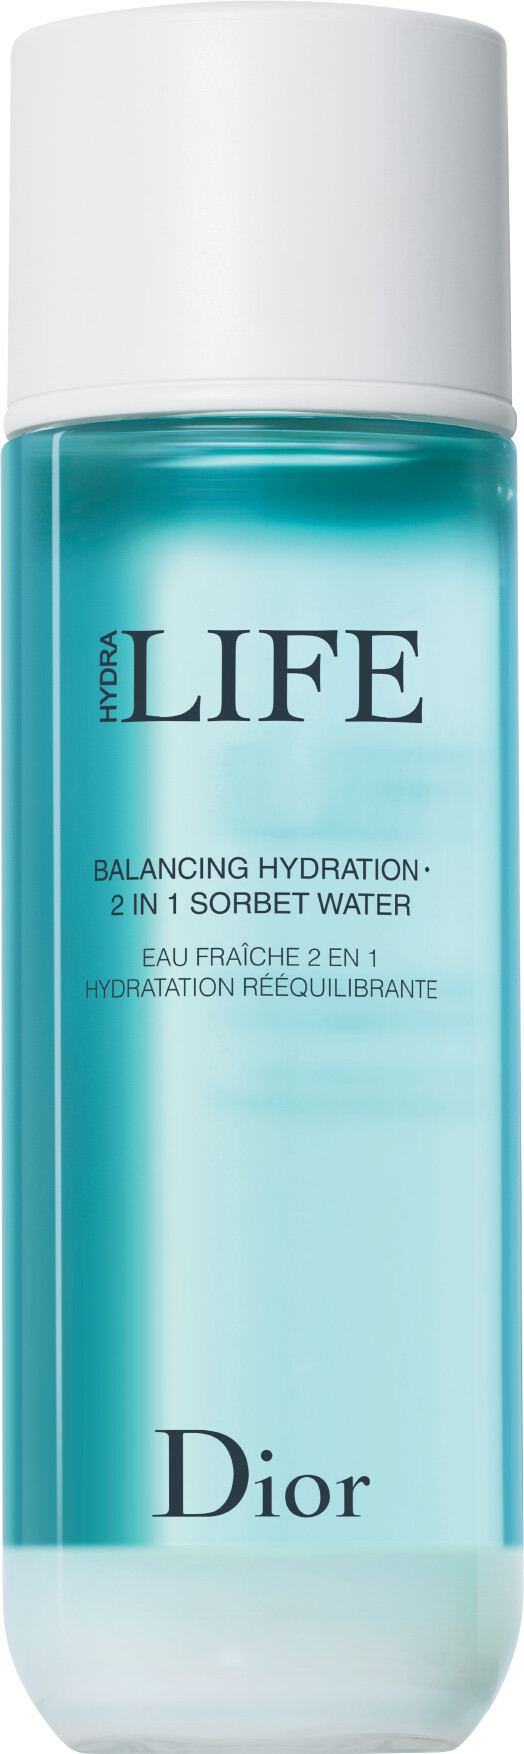 dior hydra life balancing hydration 2 in 1 sorbet water